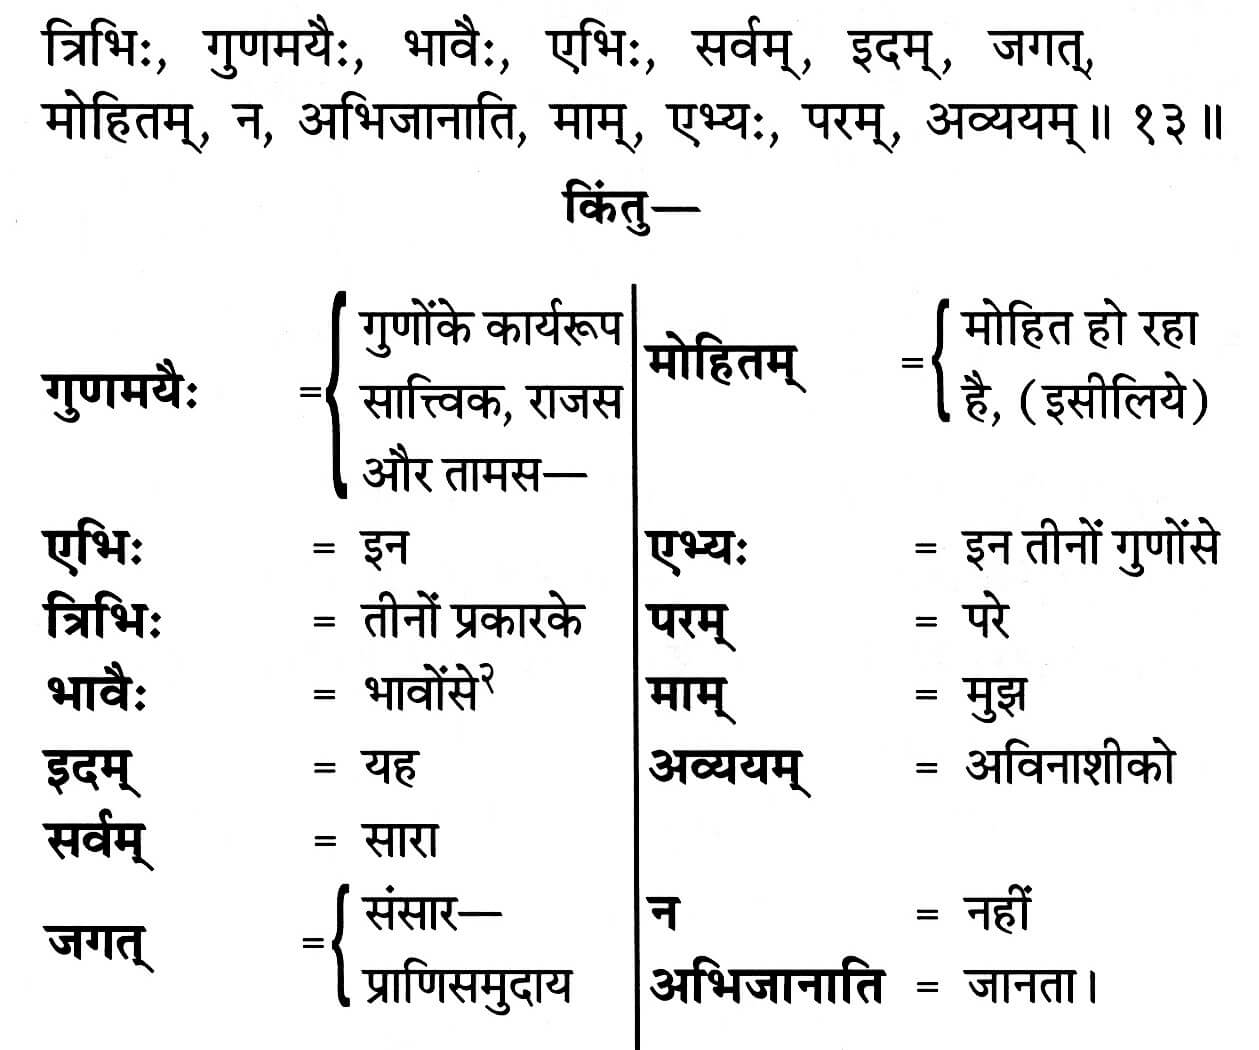 Bhagavad Gita Chapter 7 Verse 13